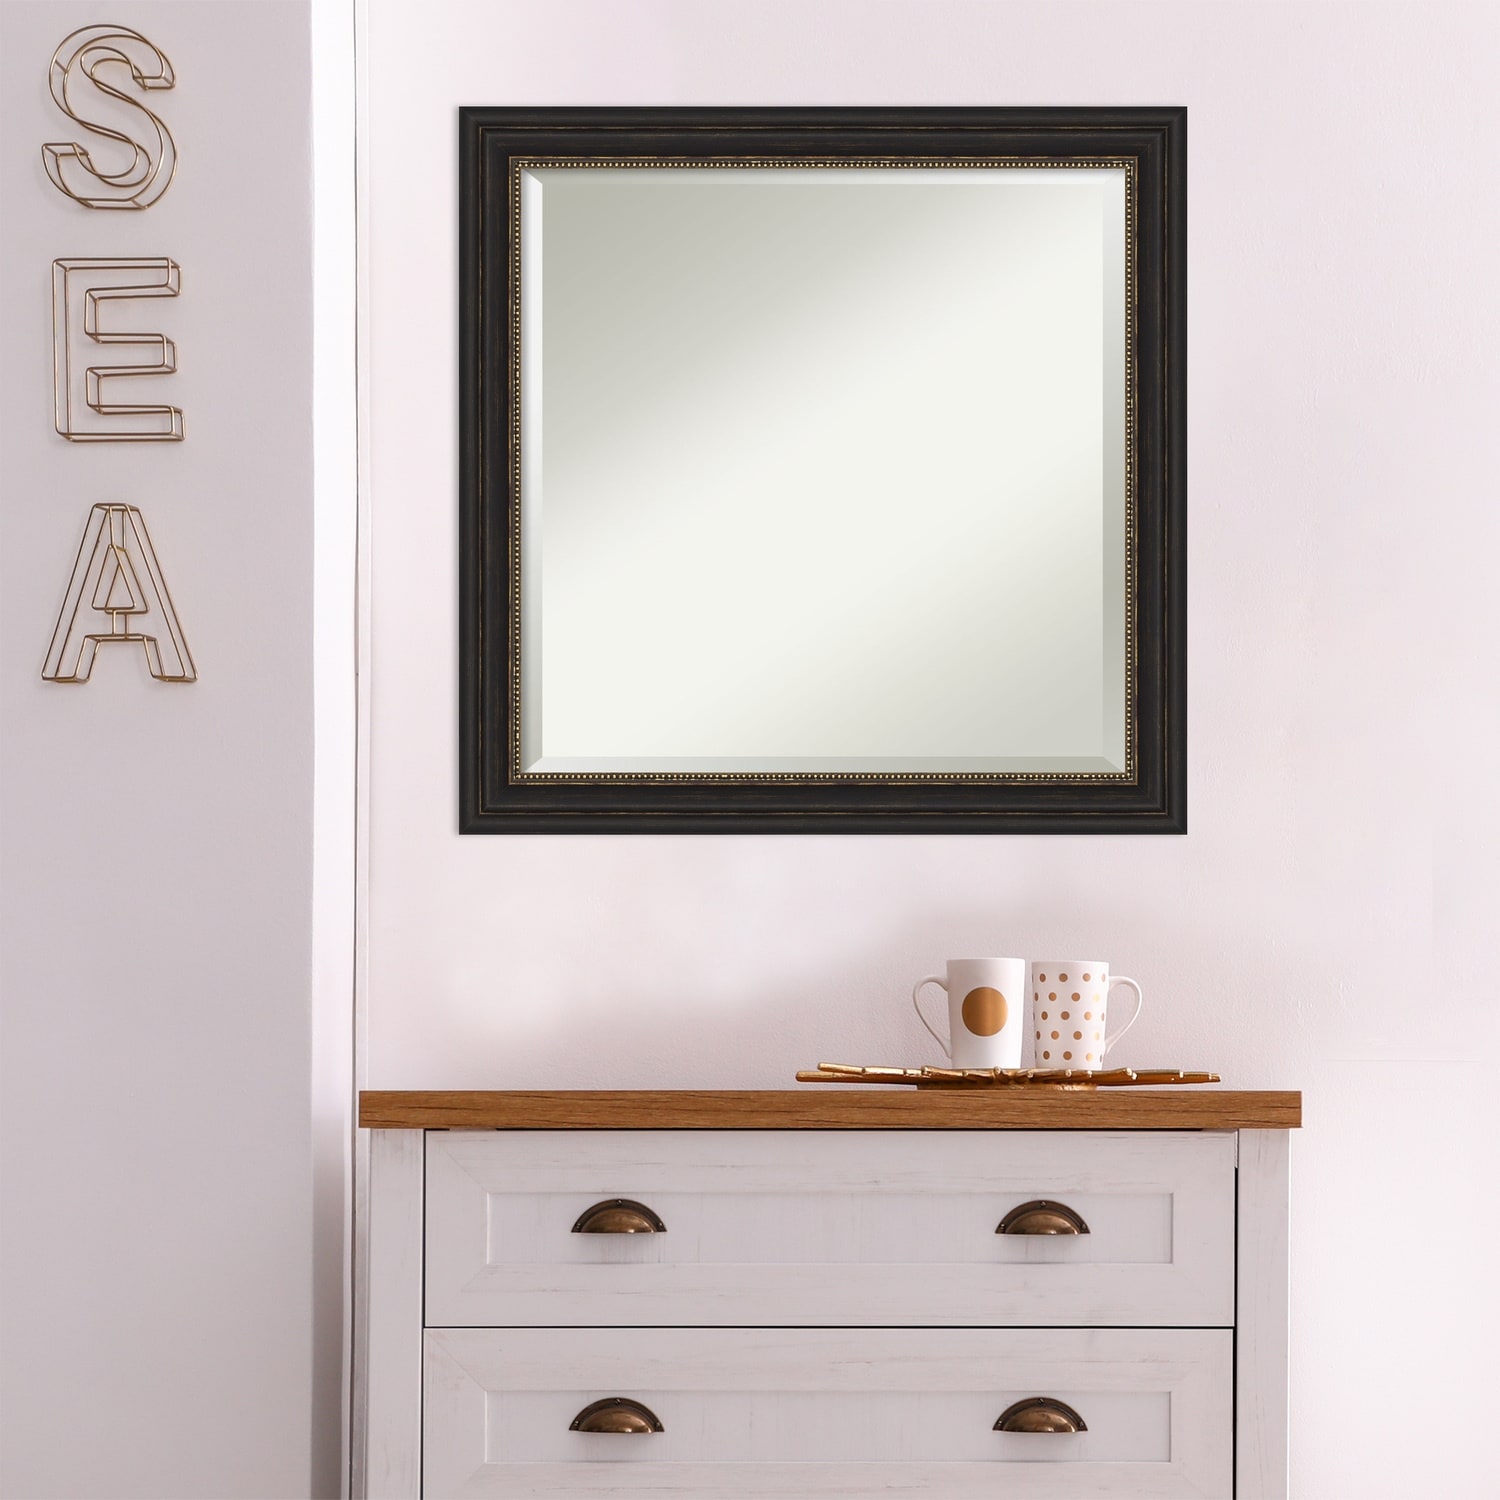 Beveled Bathroom Wall Mirror - Accent Bronze Narrow Frame